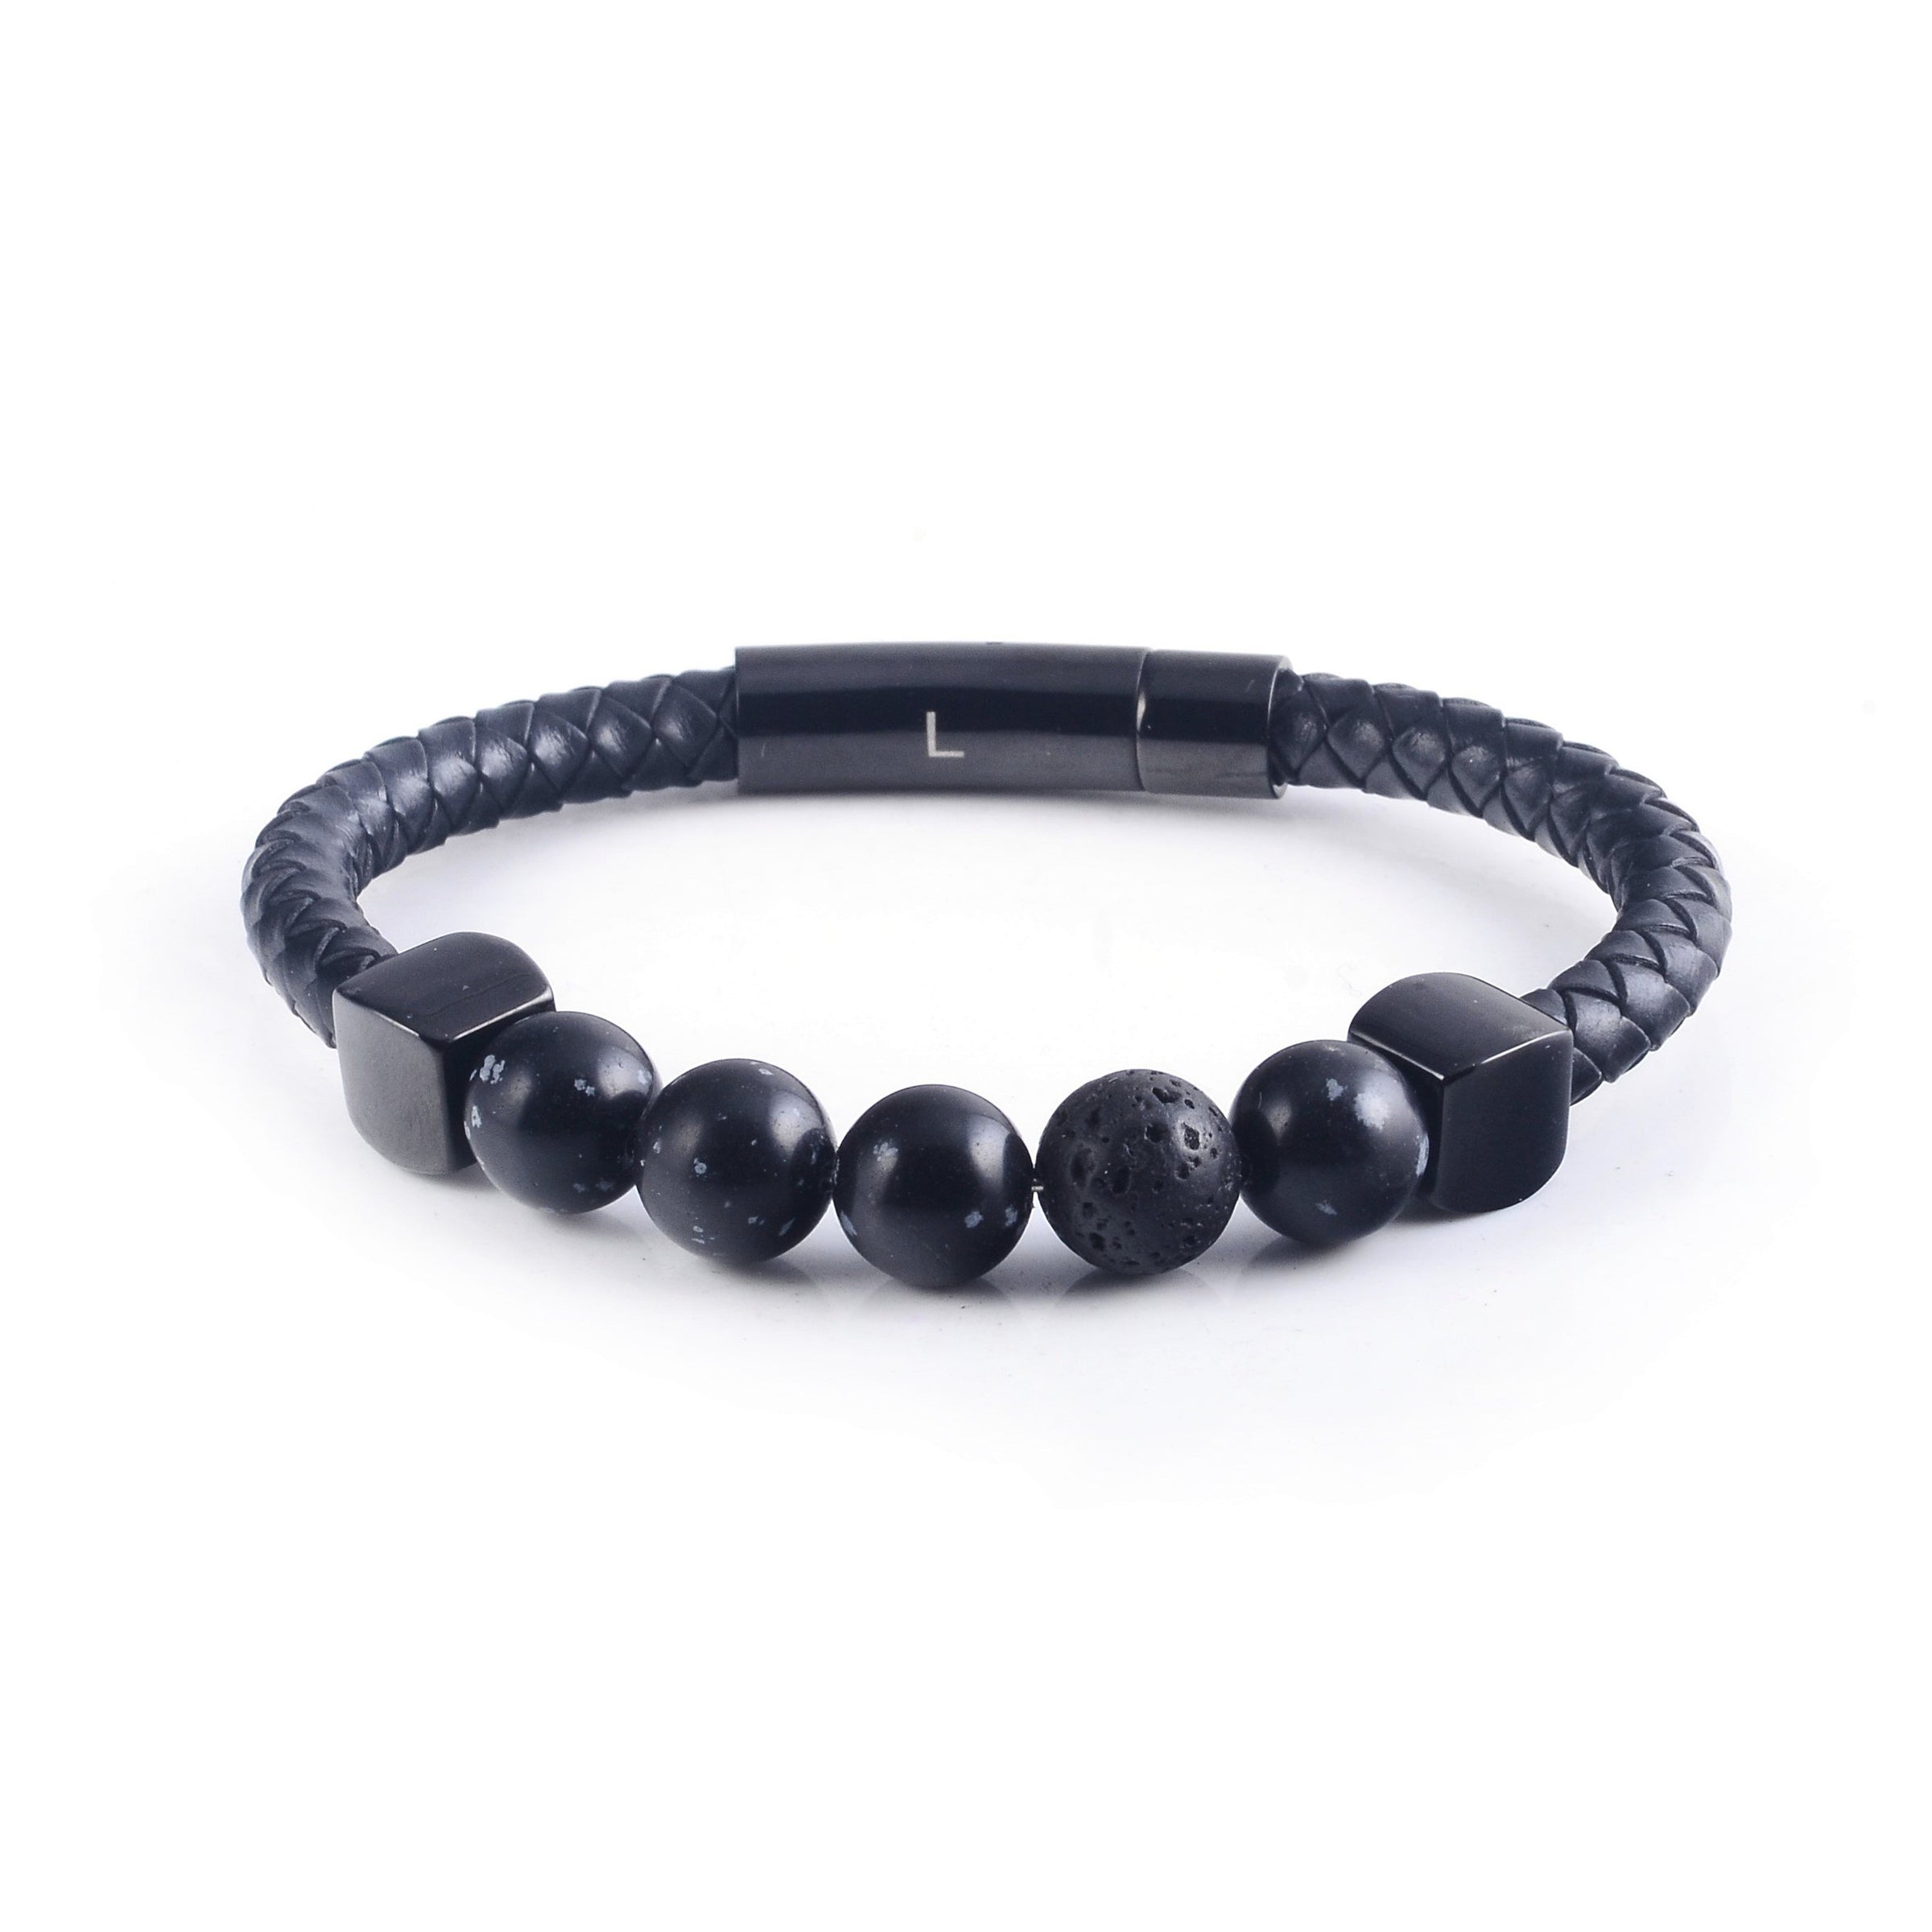 Lava Leather Bracelet in Marble Black (Size M)